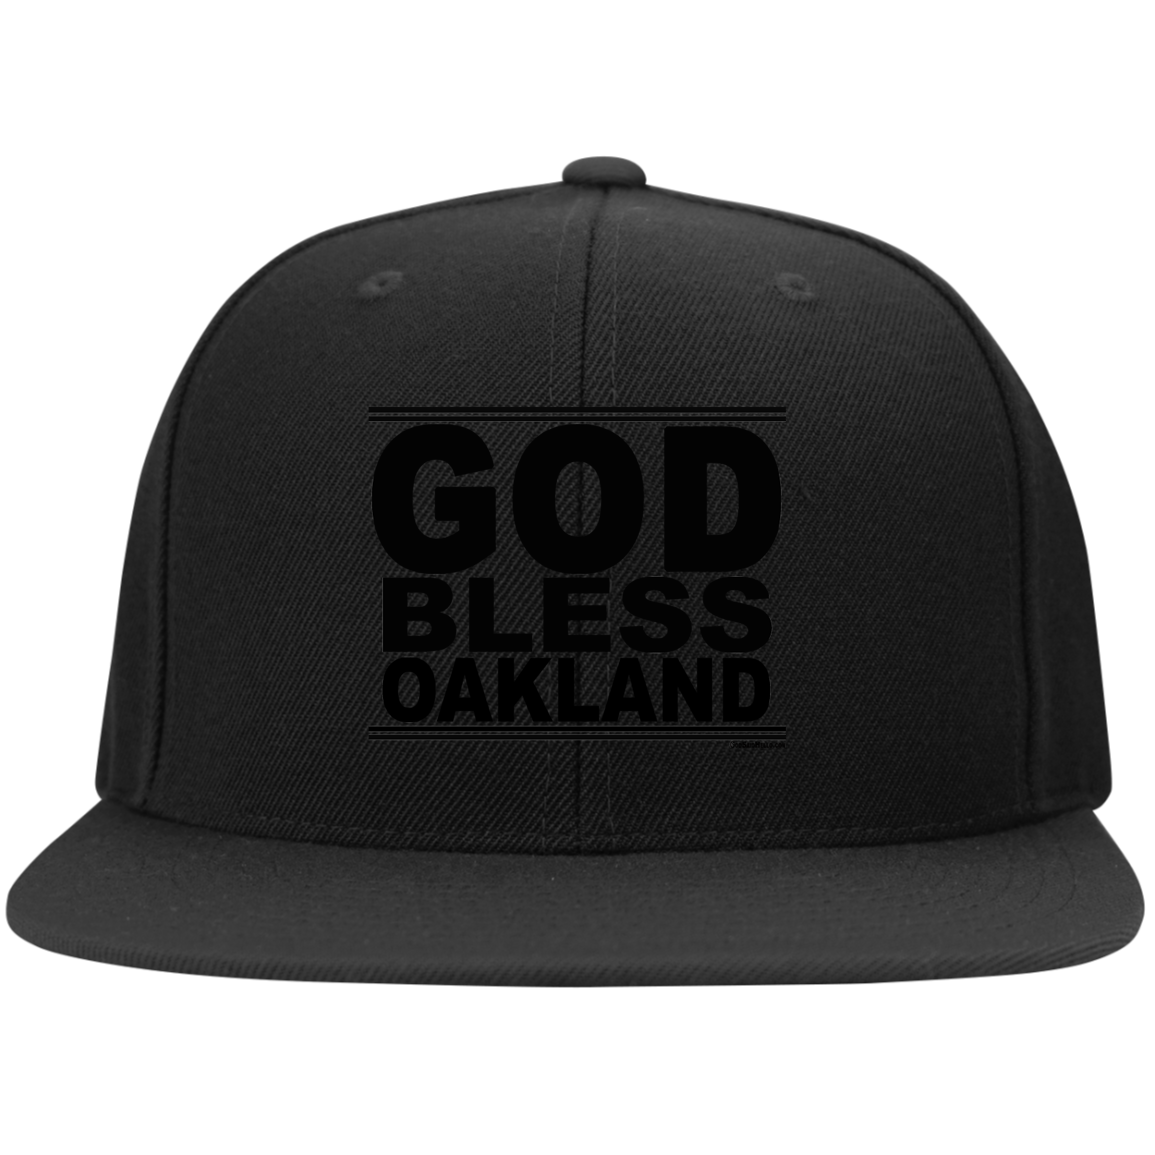 #GodBlessOakland - Snapback Hat